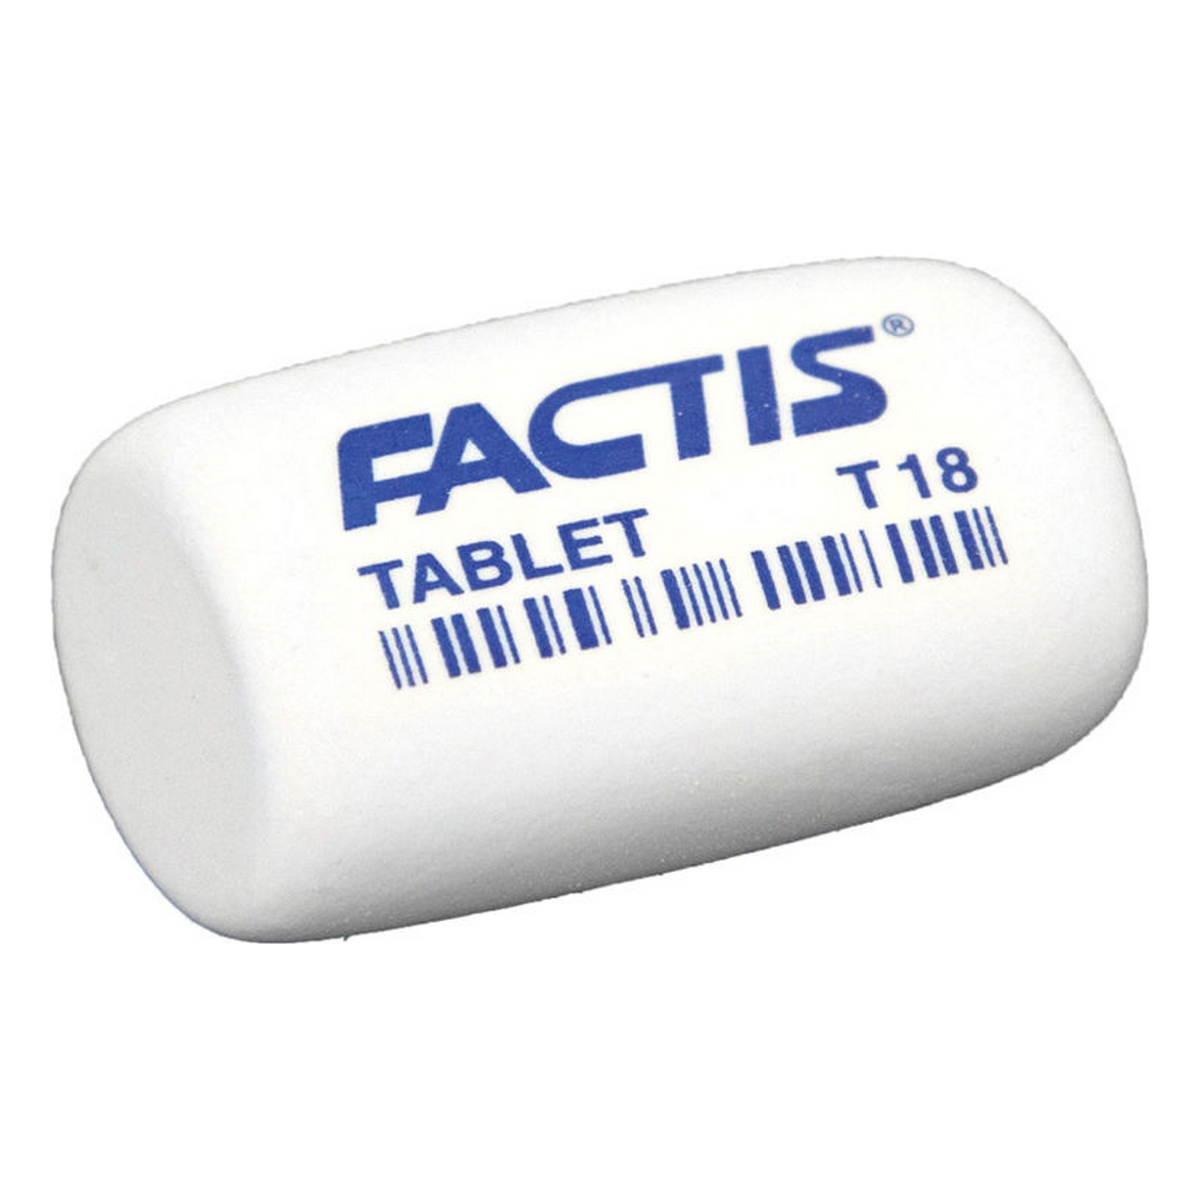 Ластик FACTIS Tablet T 18 белый 4шт - фото 3